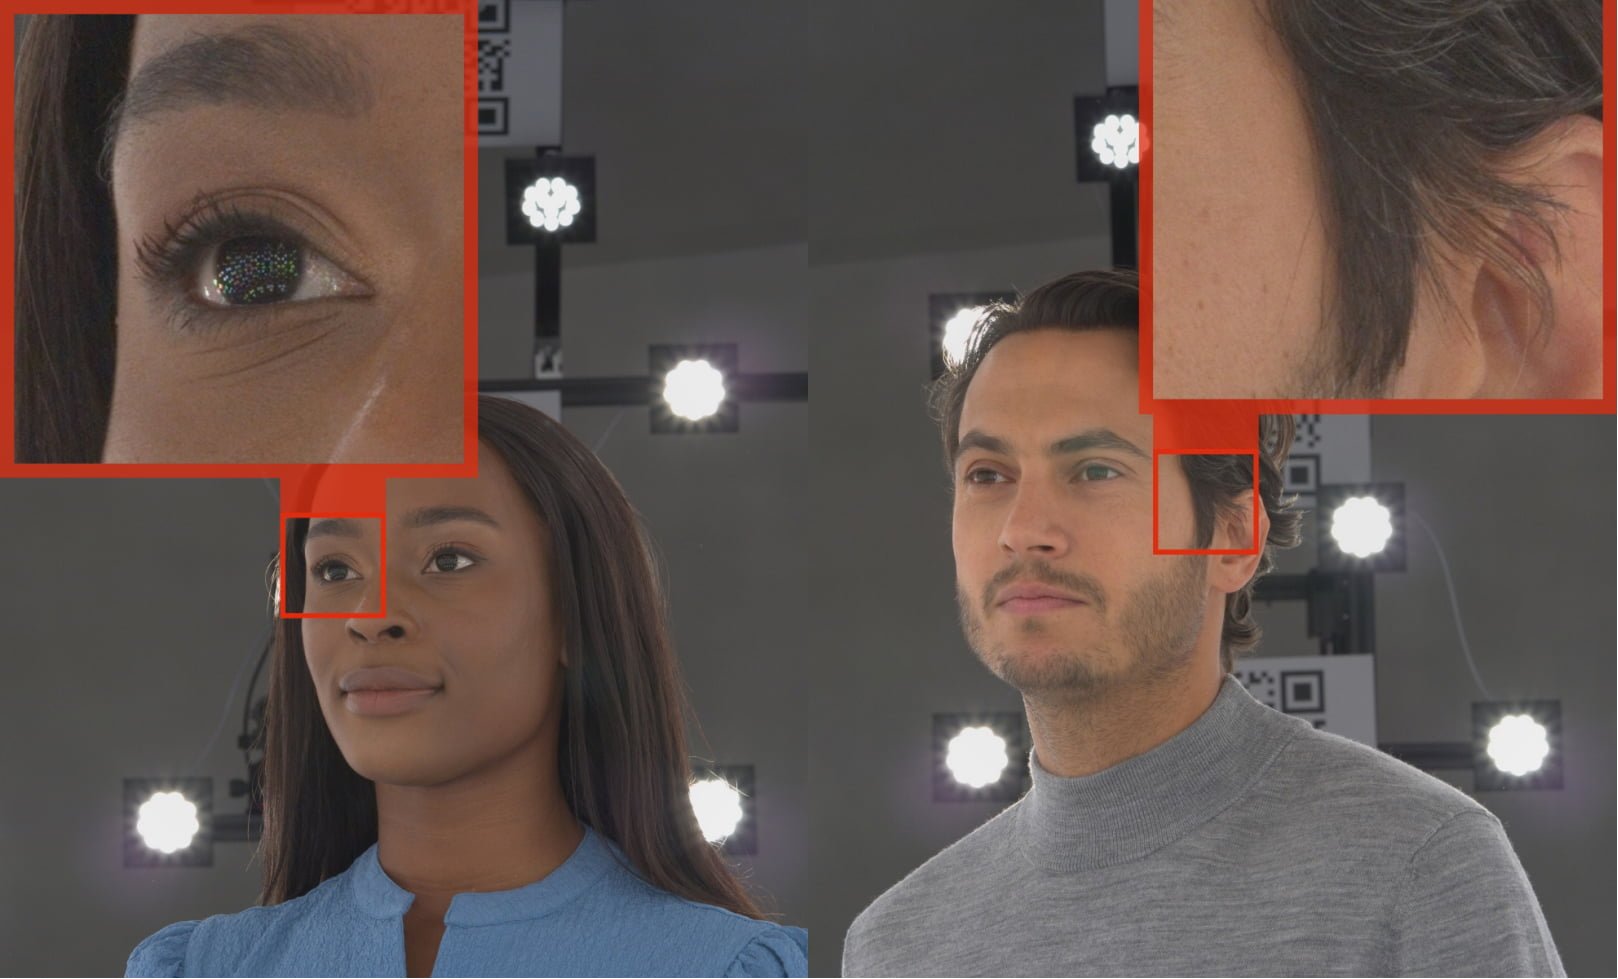 HumanRF enables photorealistic 3D avatars